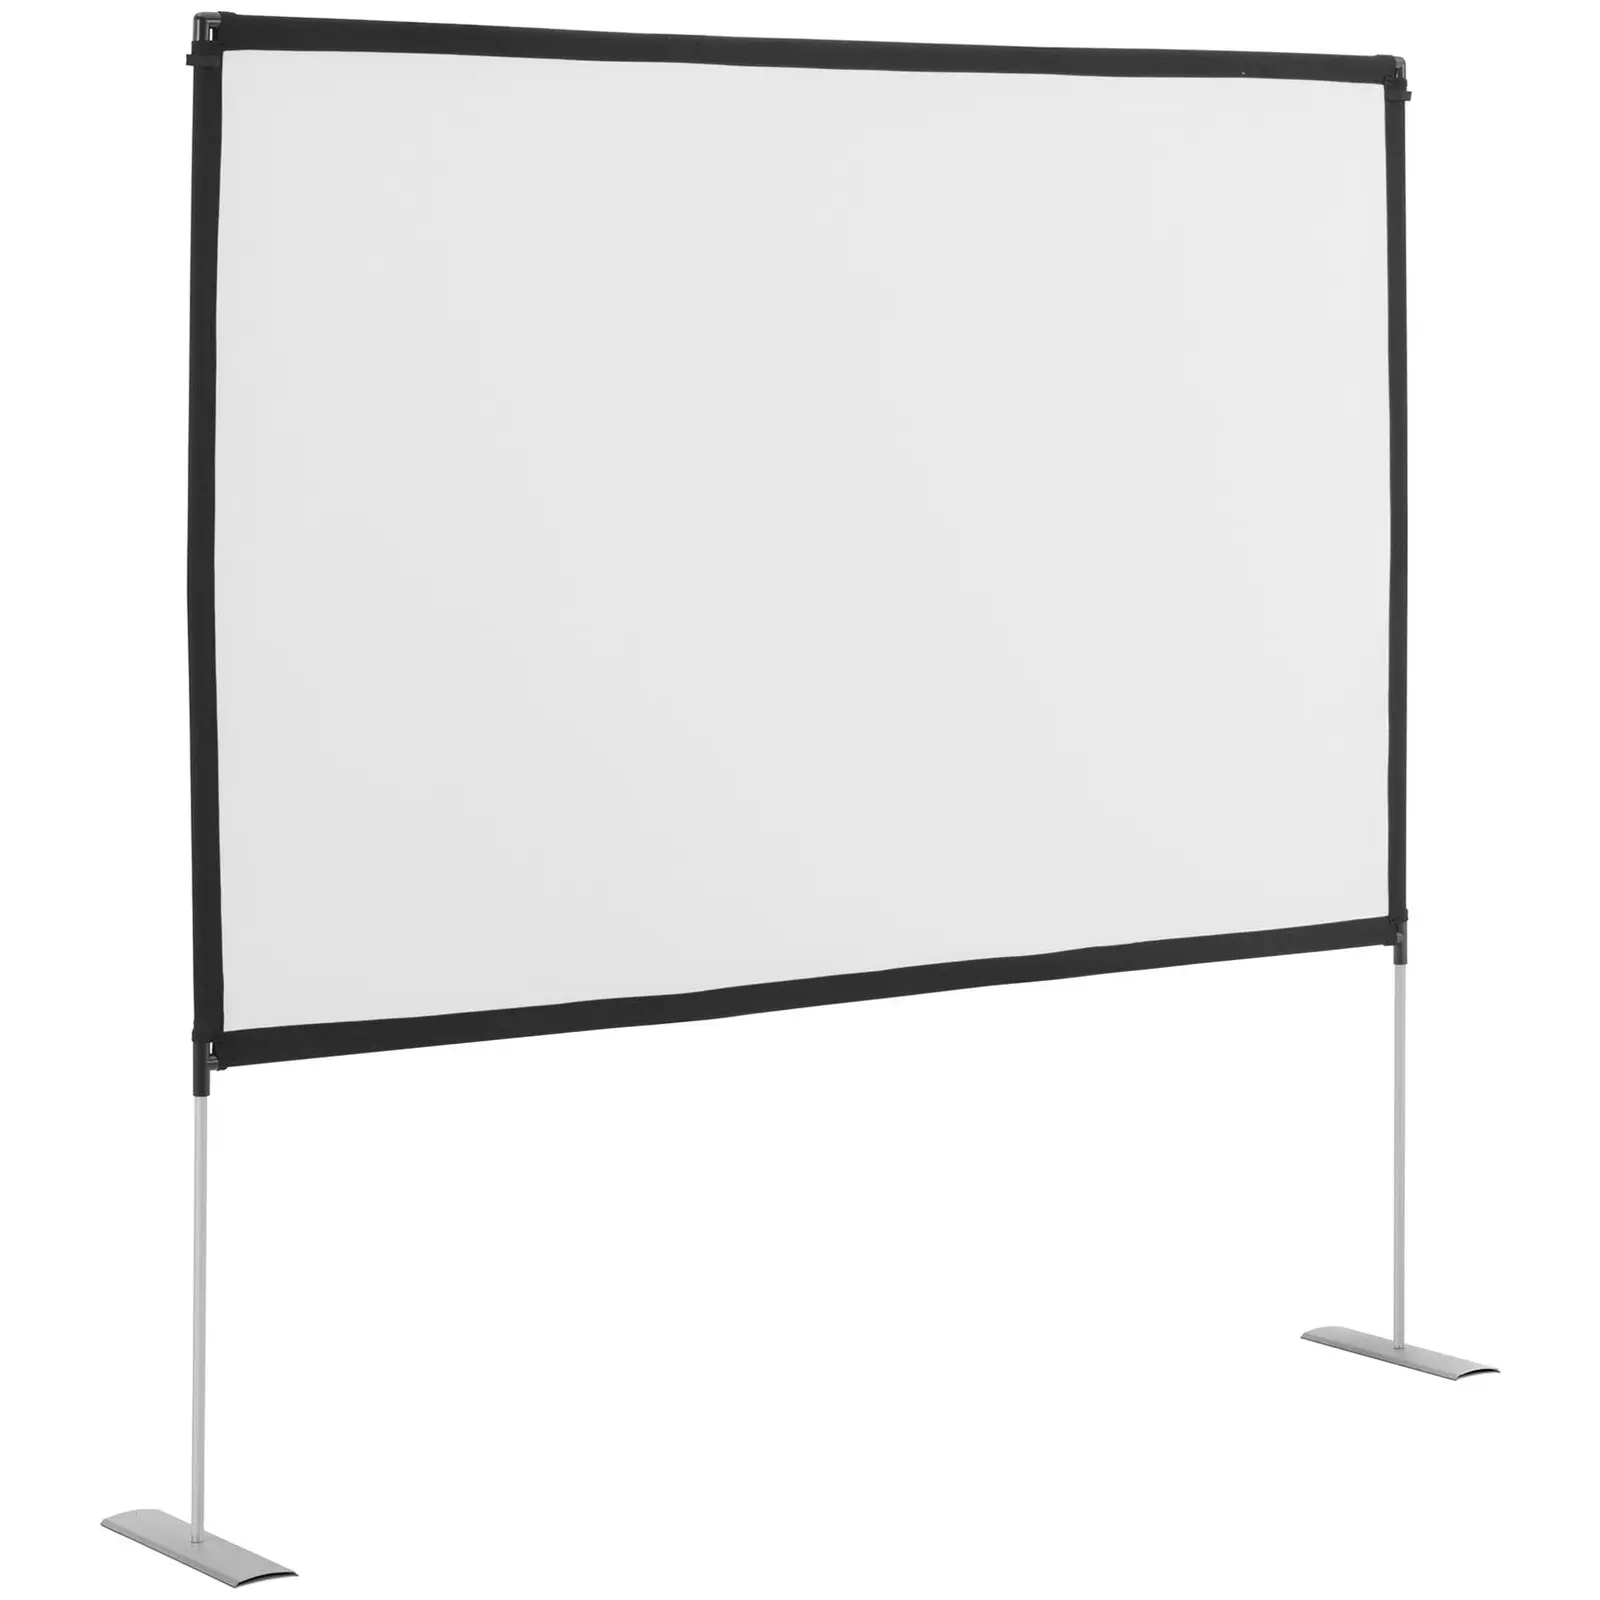 Projectorscherm - 228 x 133 cm - 16:9 - 100 inch - aluminium frame